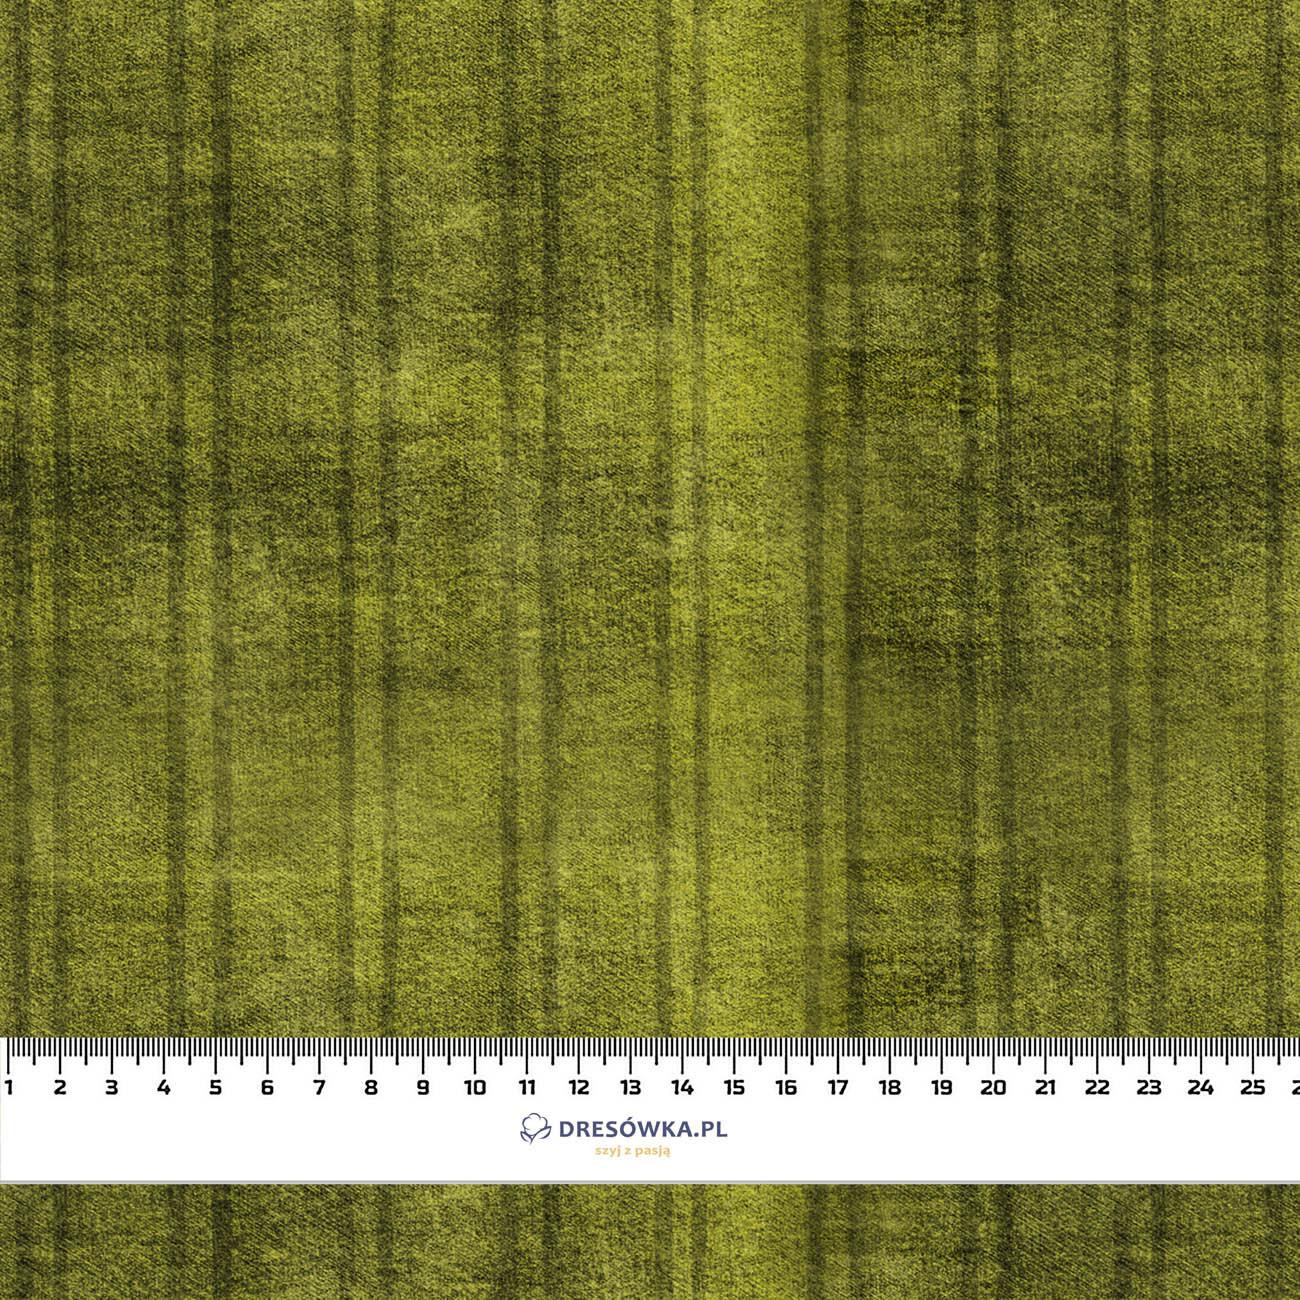 AUTUMN STRIPES  / green (AUTUMN COLORS) - Waterproof woven fabric